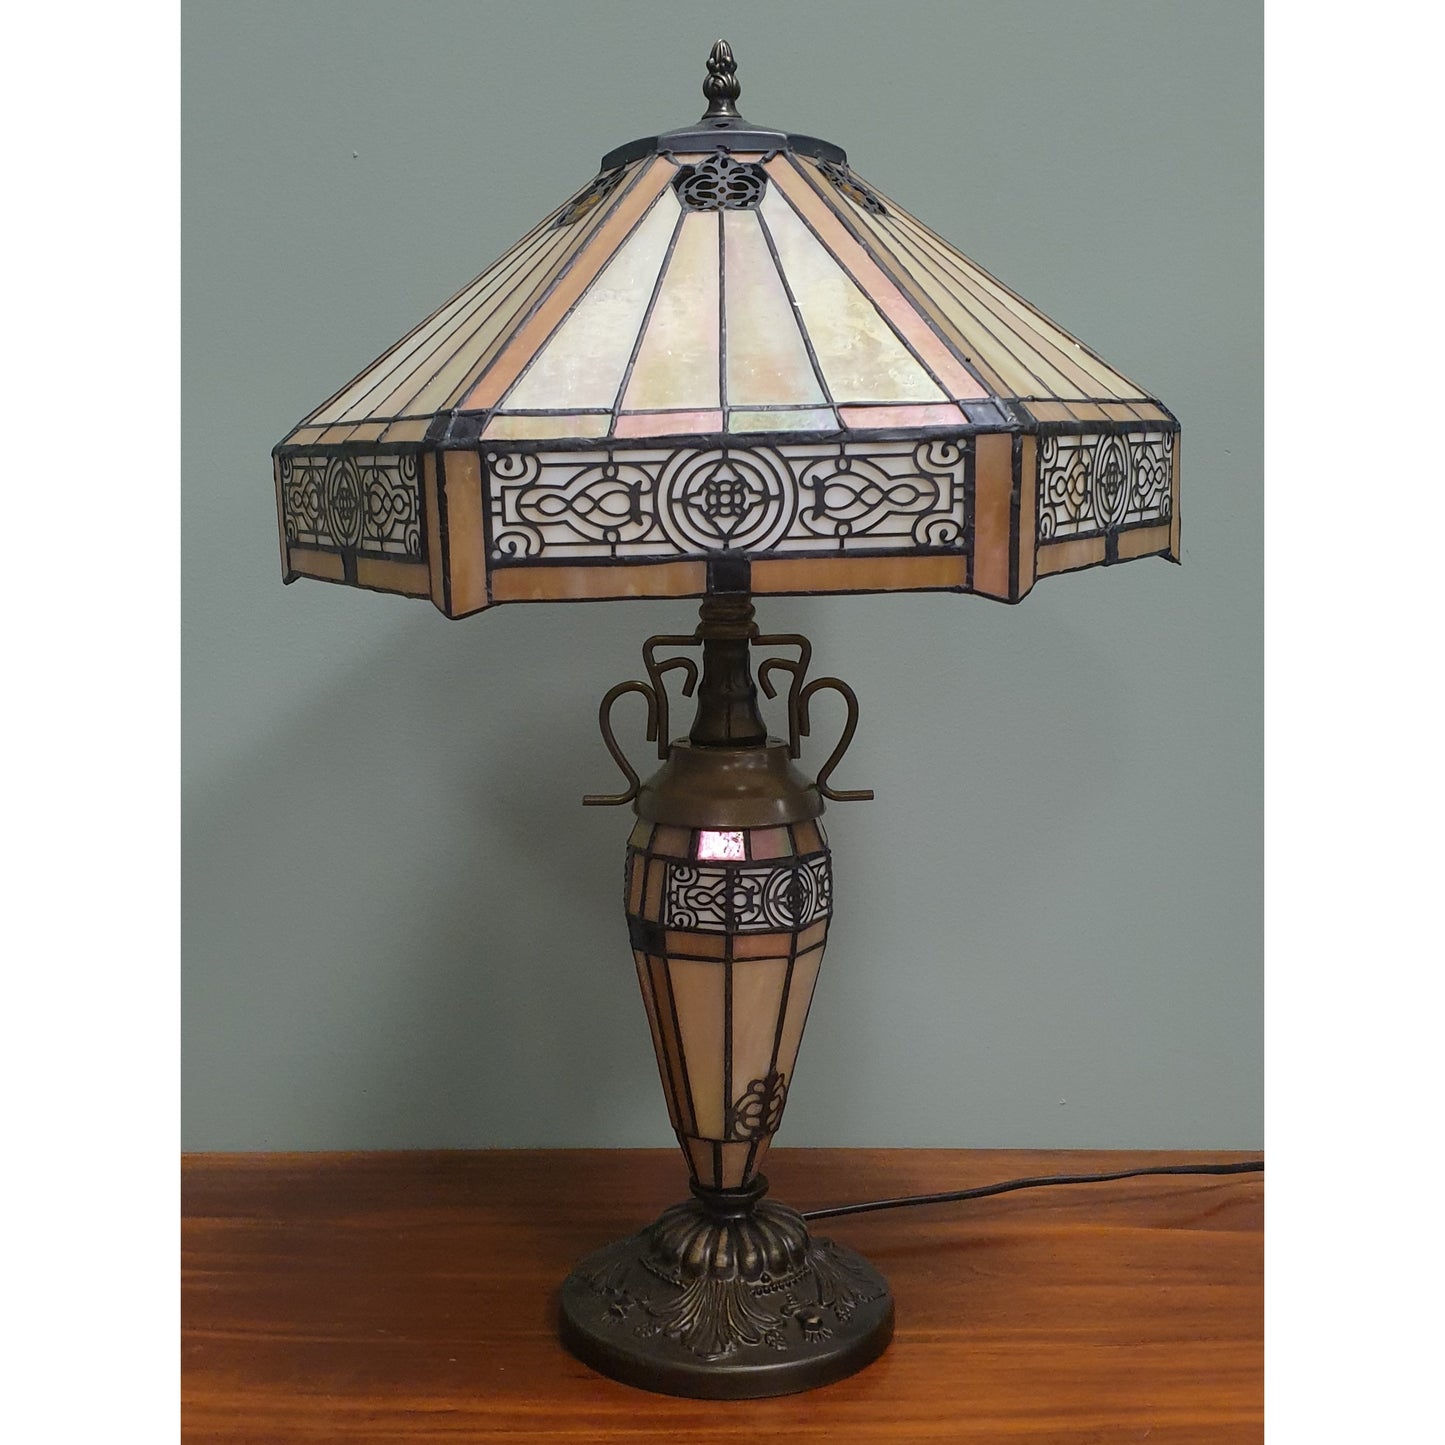 Tiffany Style Table Lamp with Hexagonal Shade